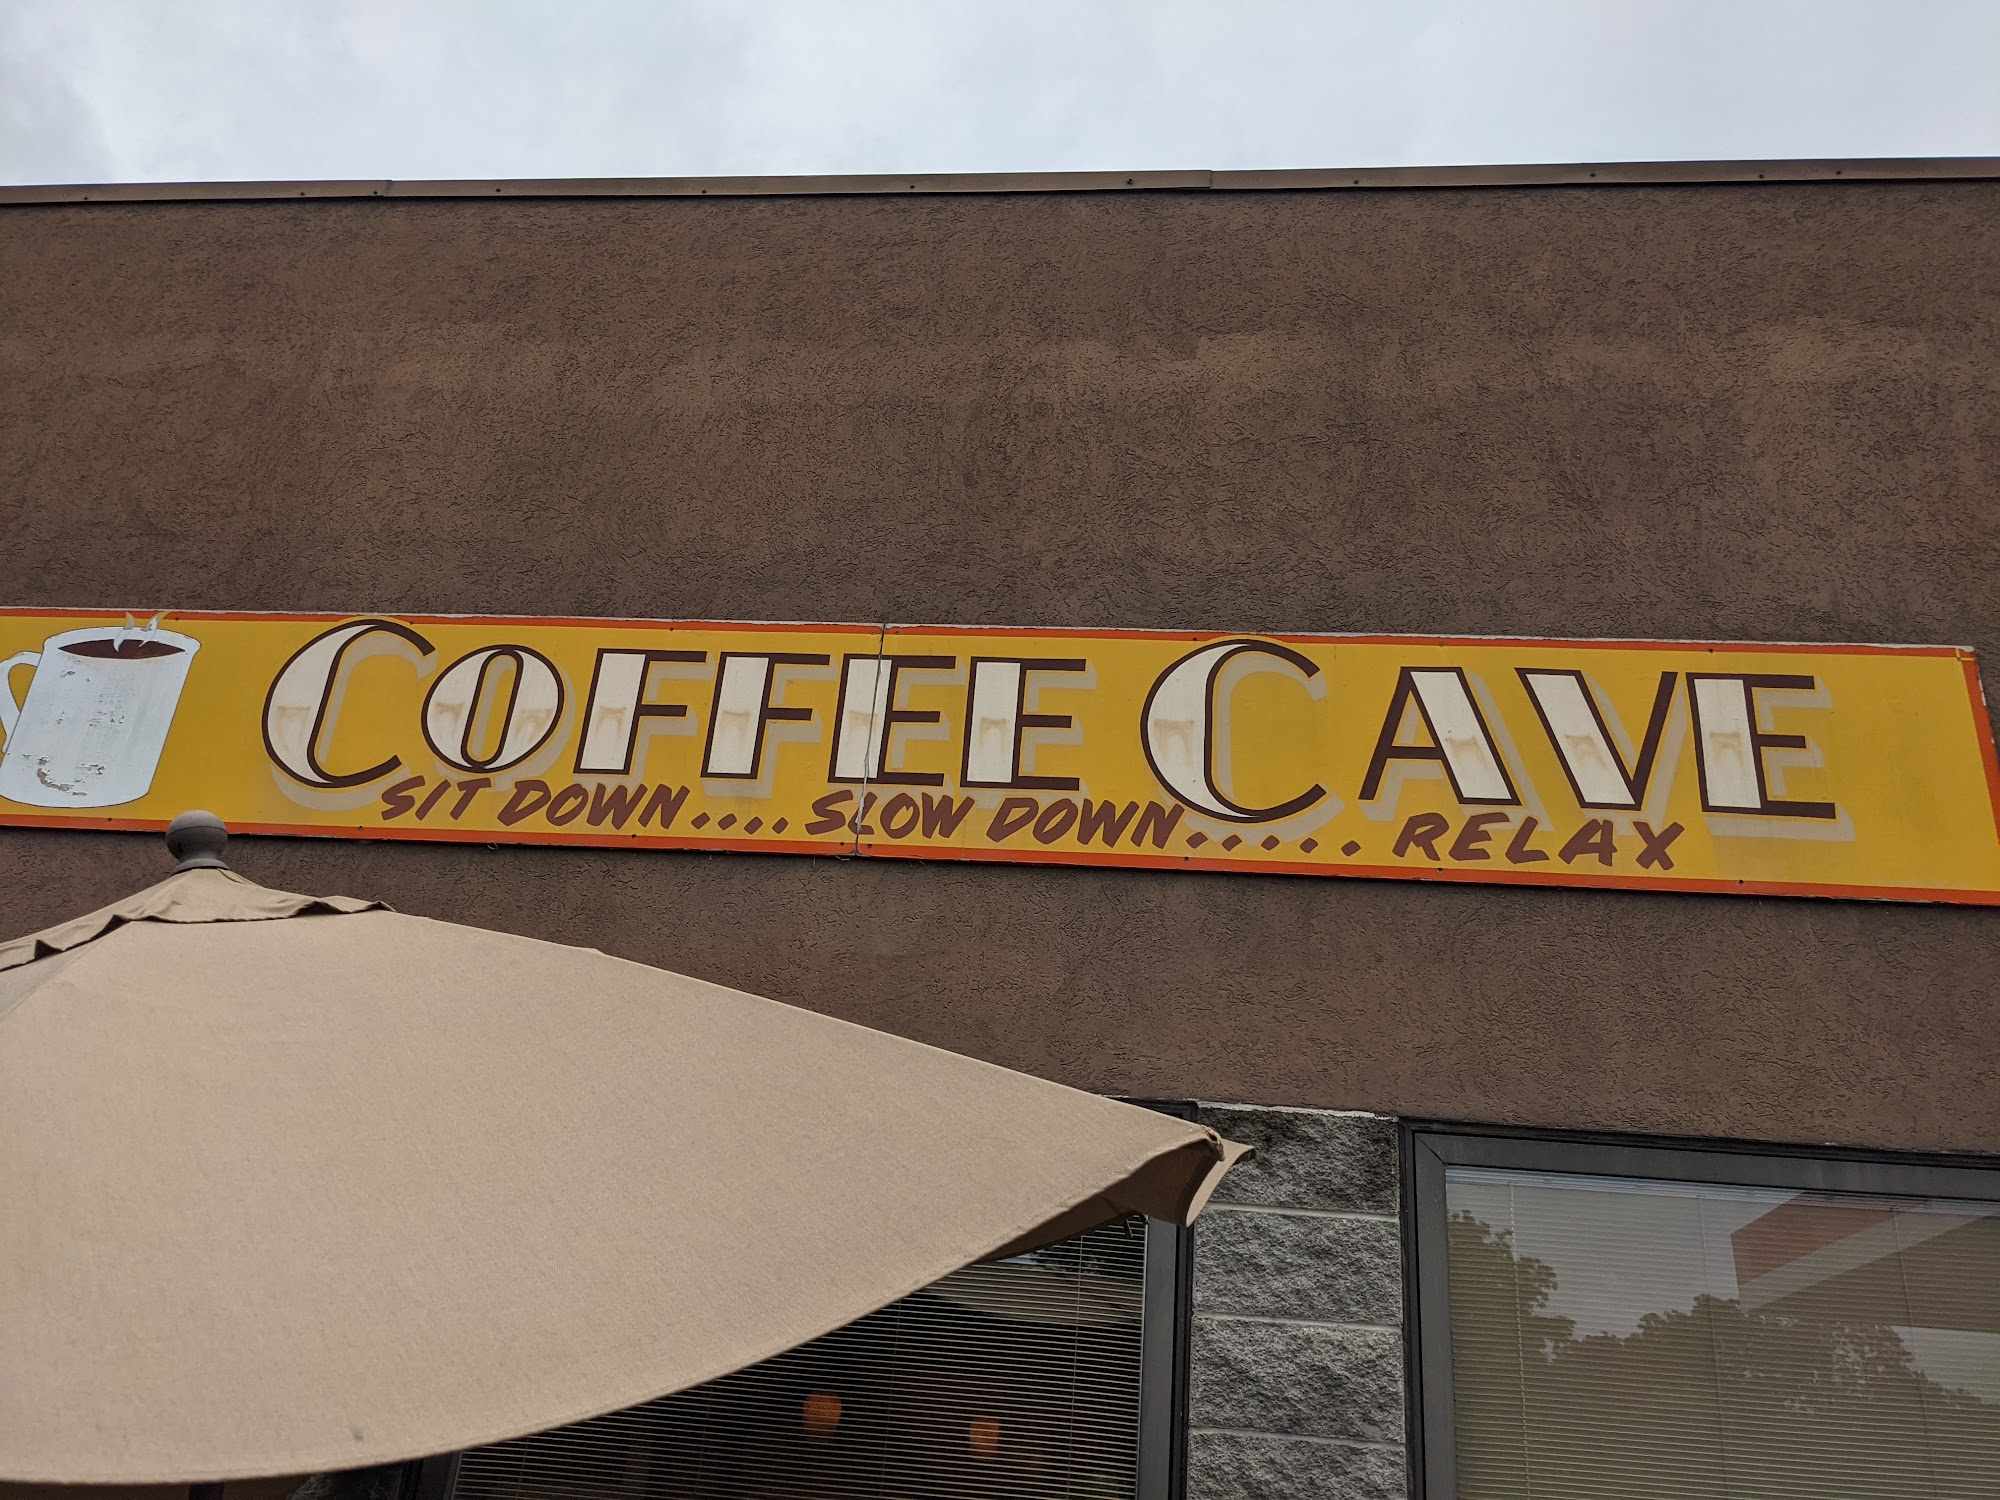 Coffee Cave